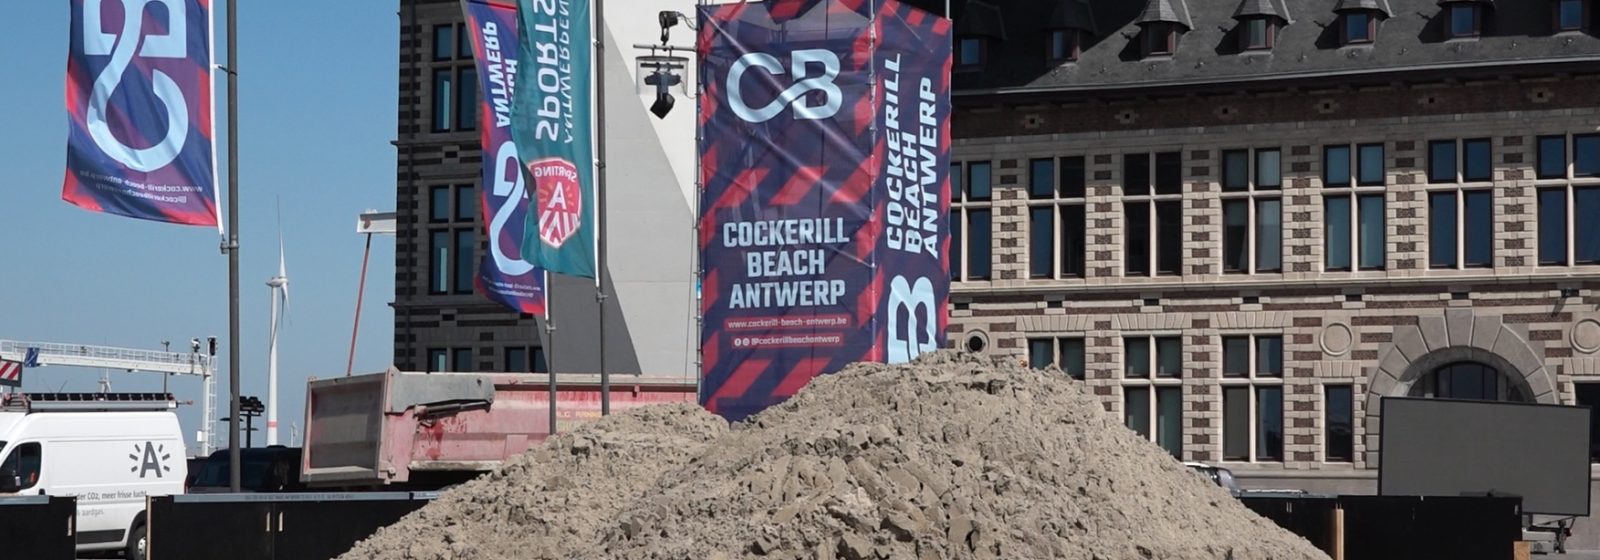 Cockerill Beach Antwerp